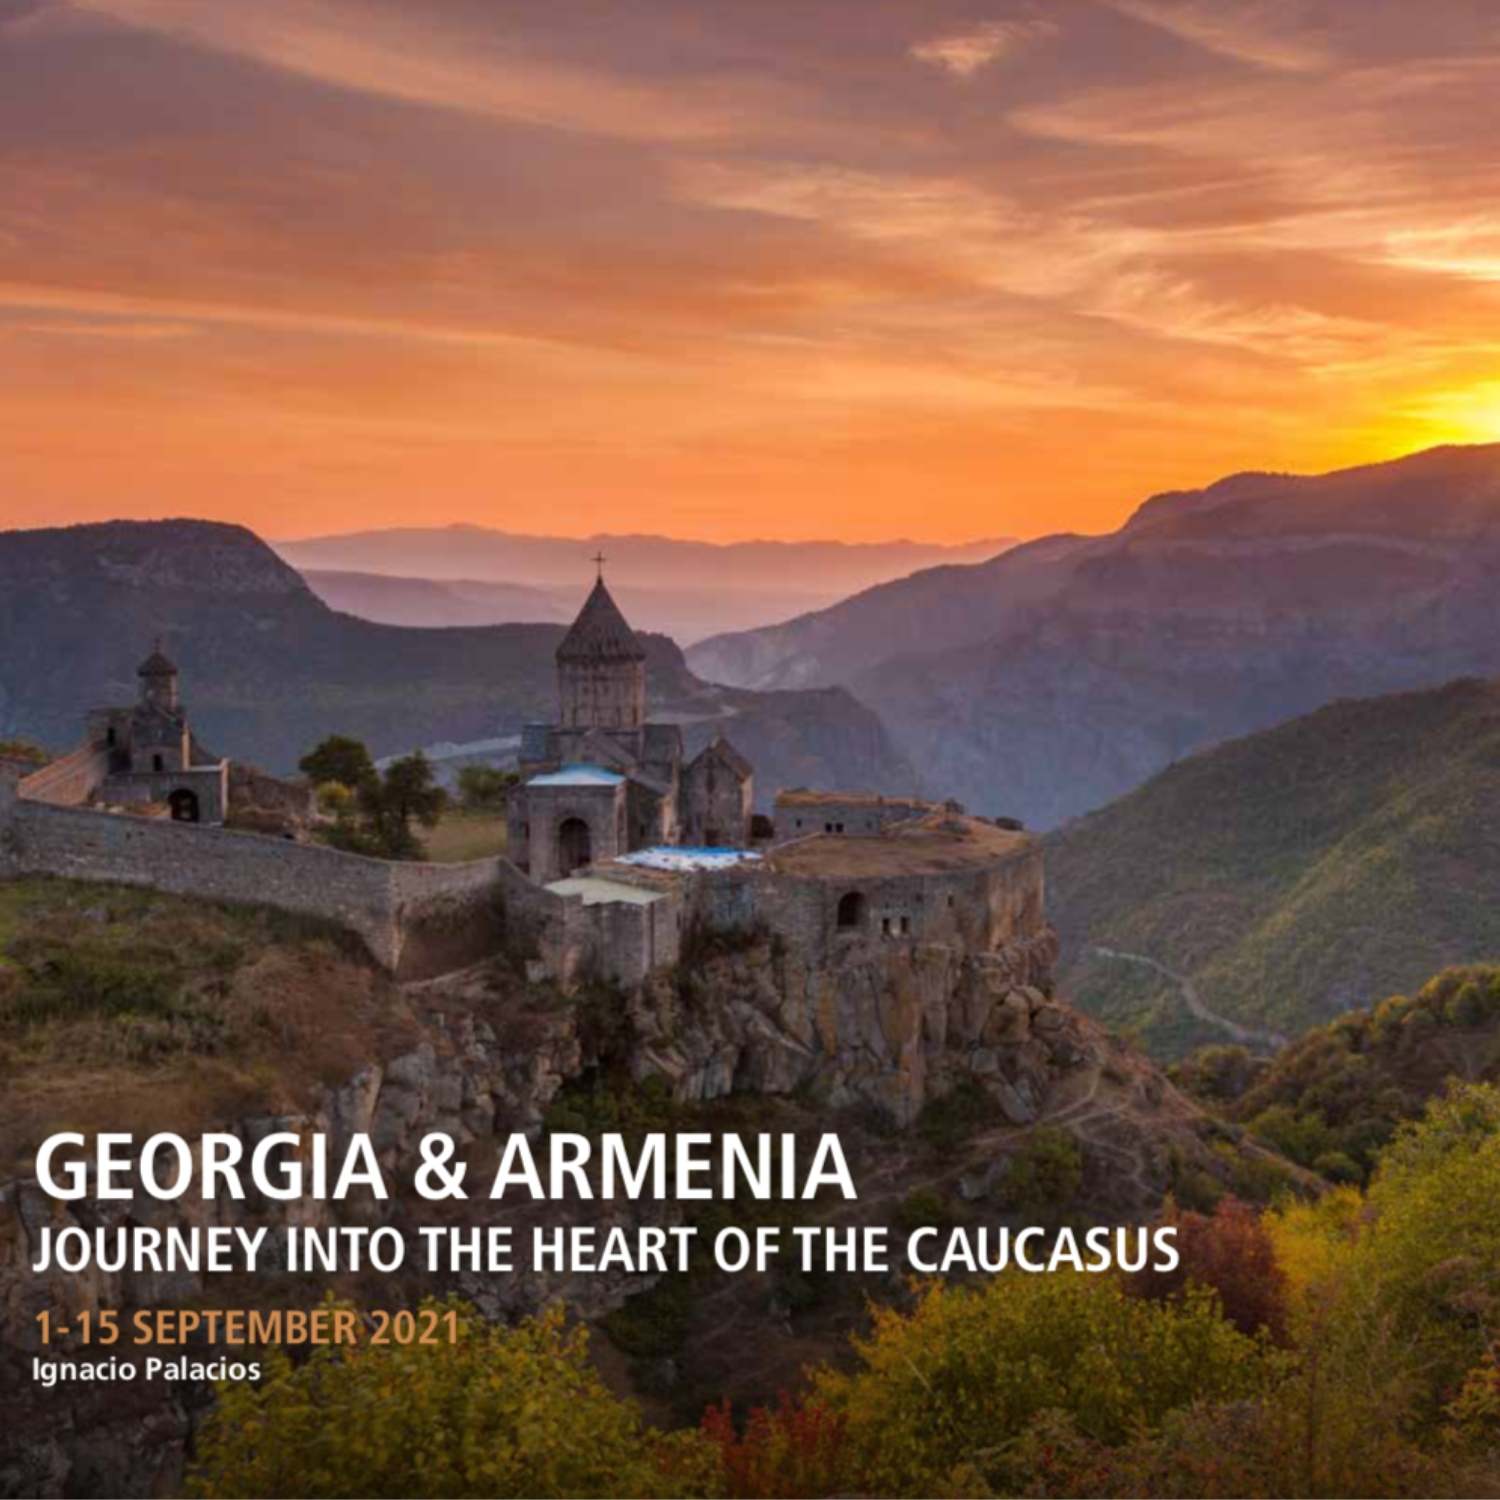 Georgia Armenia and the caucasus Photography Tour and Workshop with Ignacio Palacios 2021